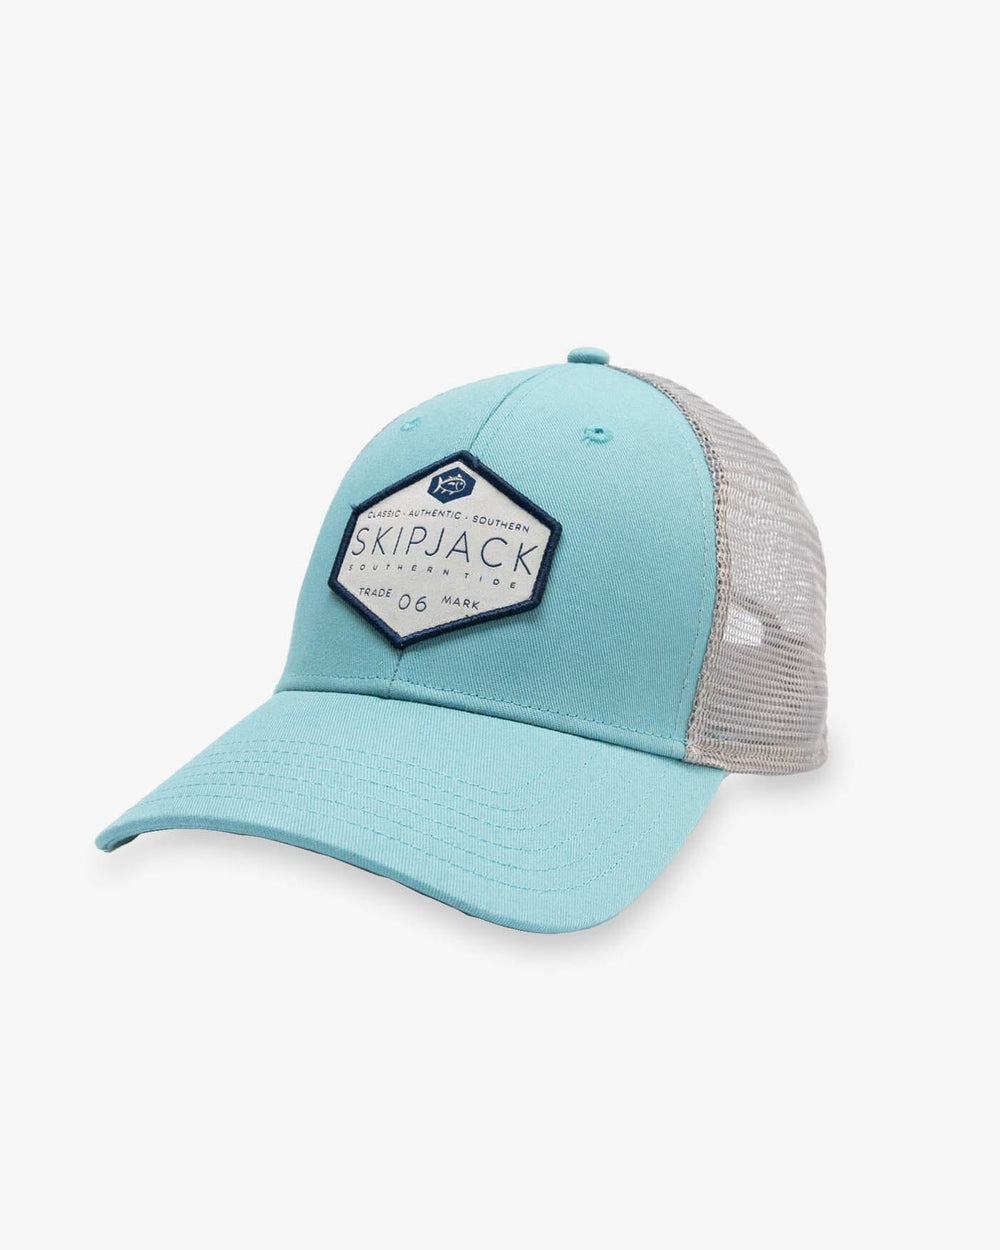 Skipjack Trademark Trucker Hat